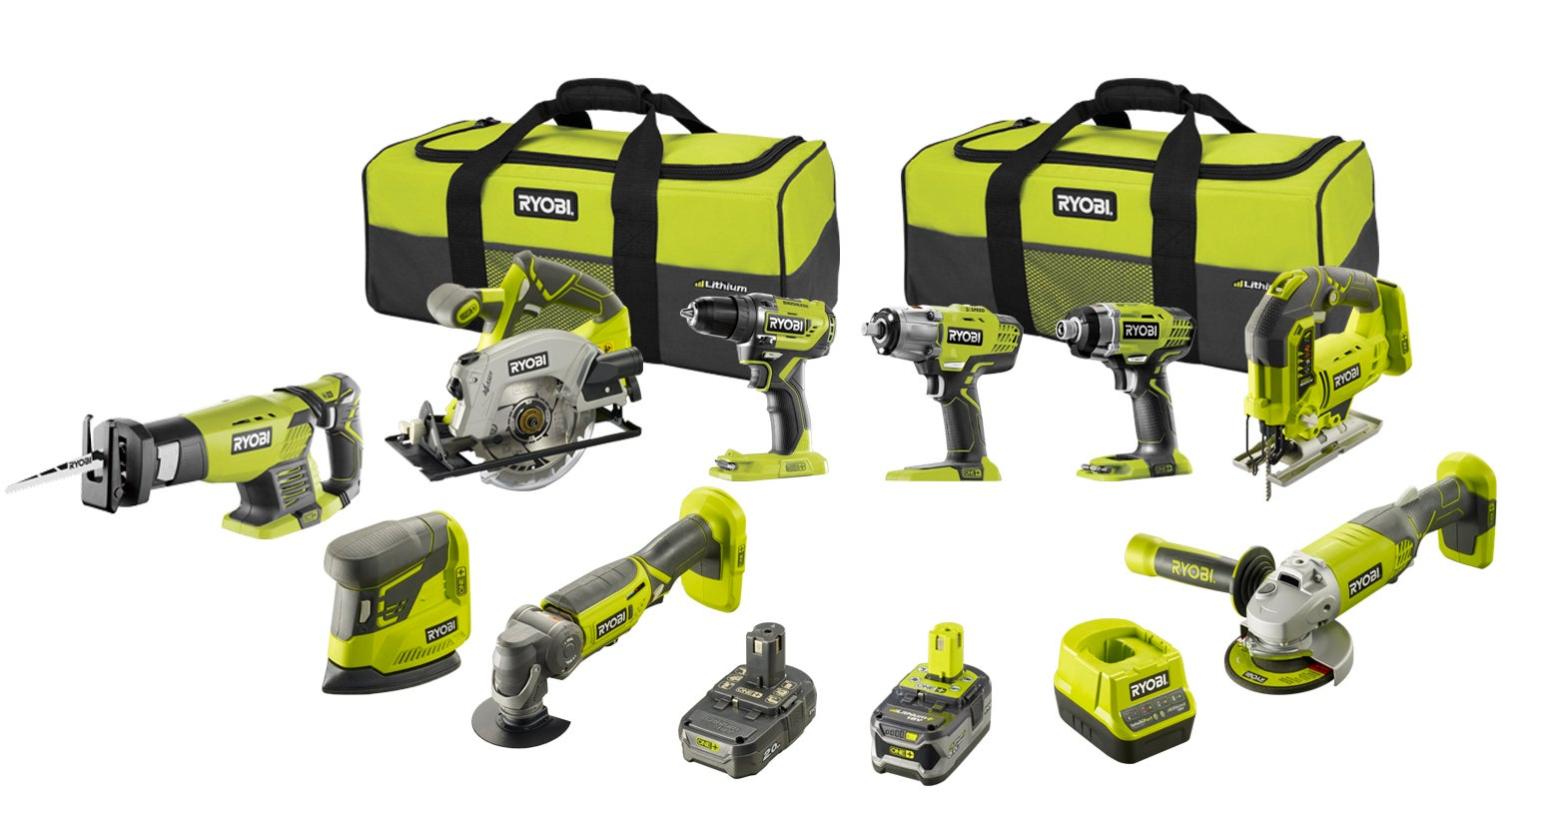 Pack de 5 outils sans fil RYOBI R18ck5a-242s, 18 V 4 Ah, 2 batteries